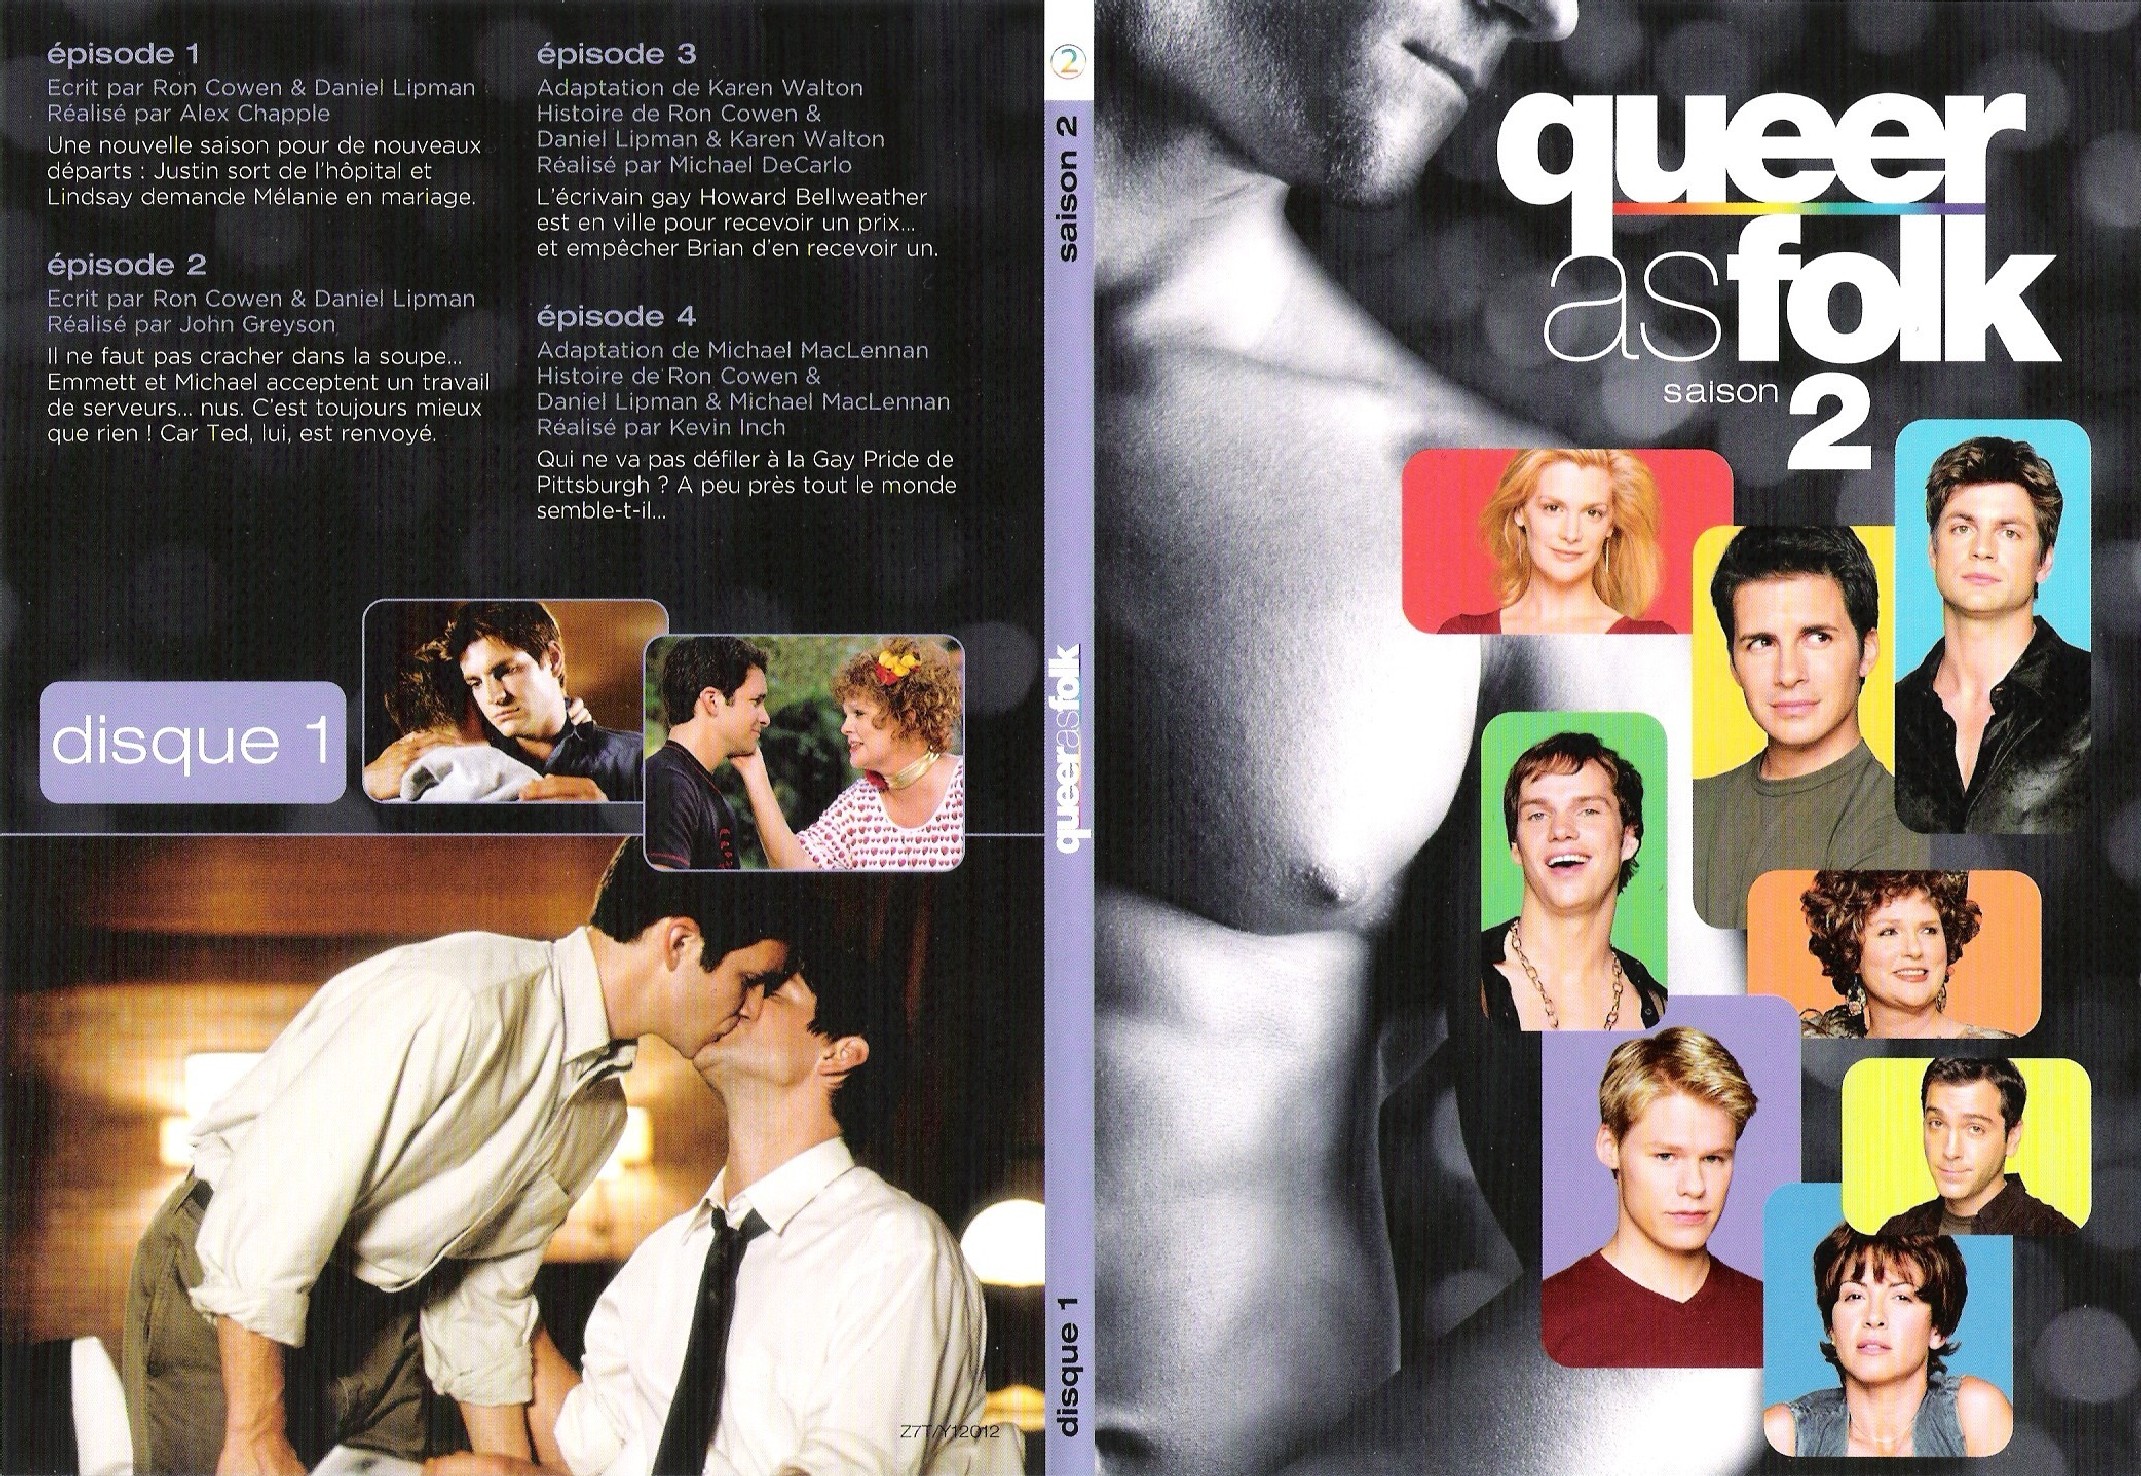 Jaquette DVD Queer As Folk (US) Saison 2 DVD 1